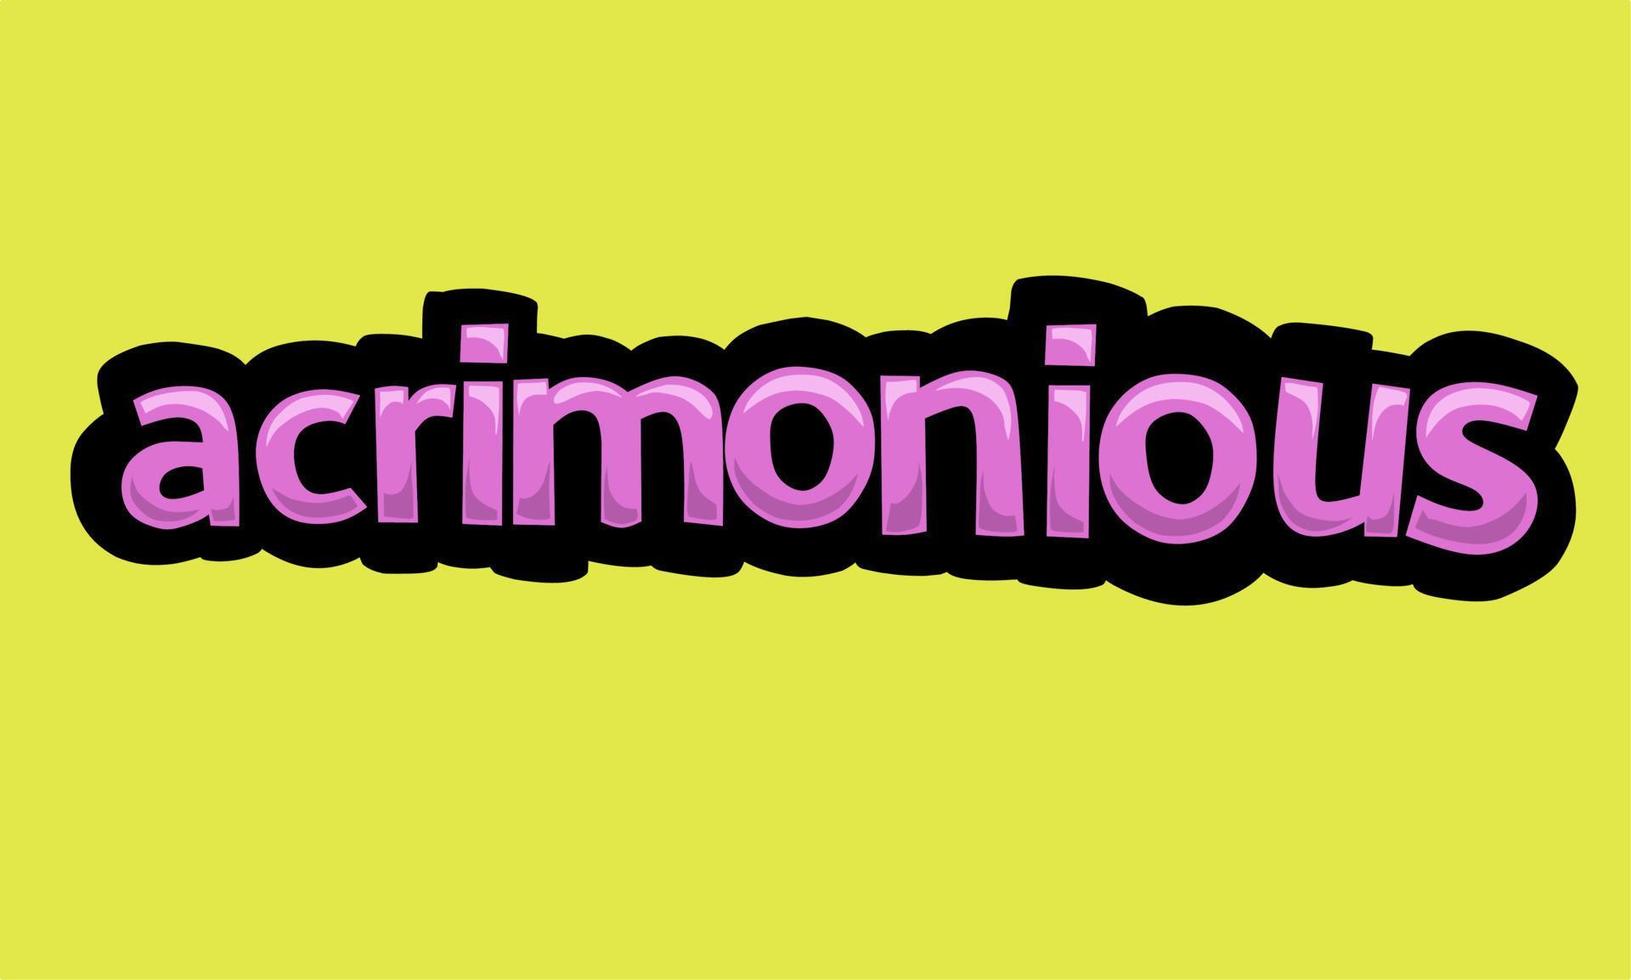 ACRIMONIOUS writing vector design on a yellow background 11594357 ...